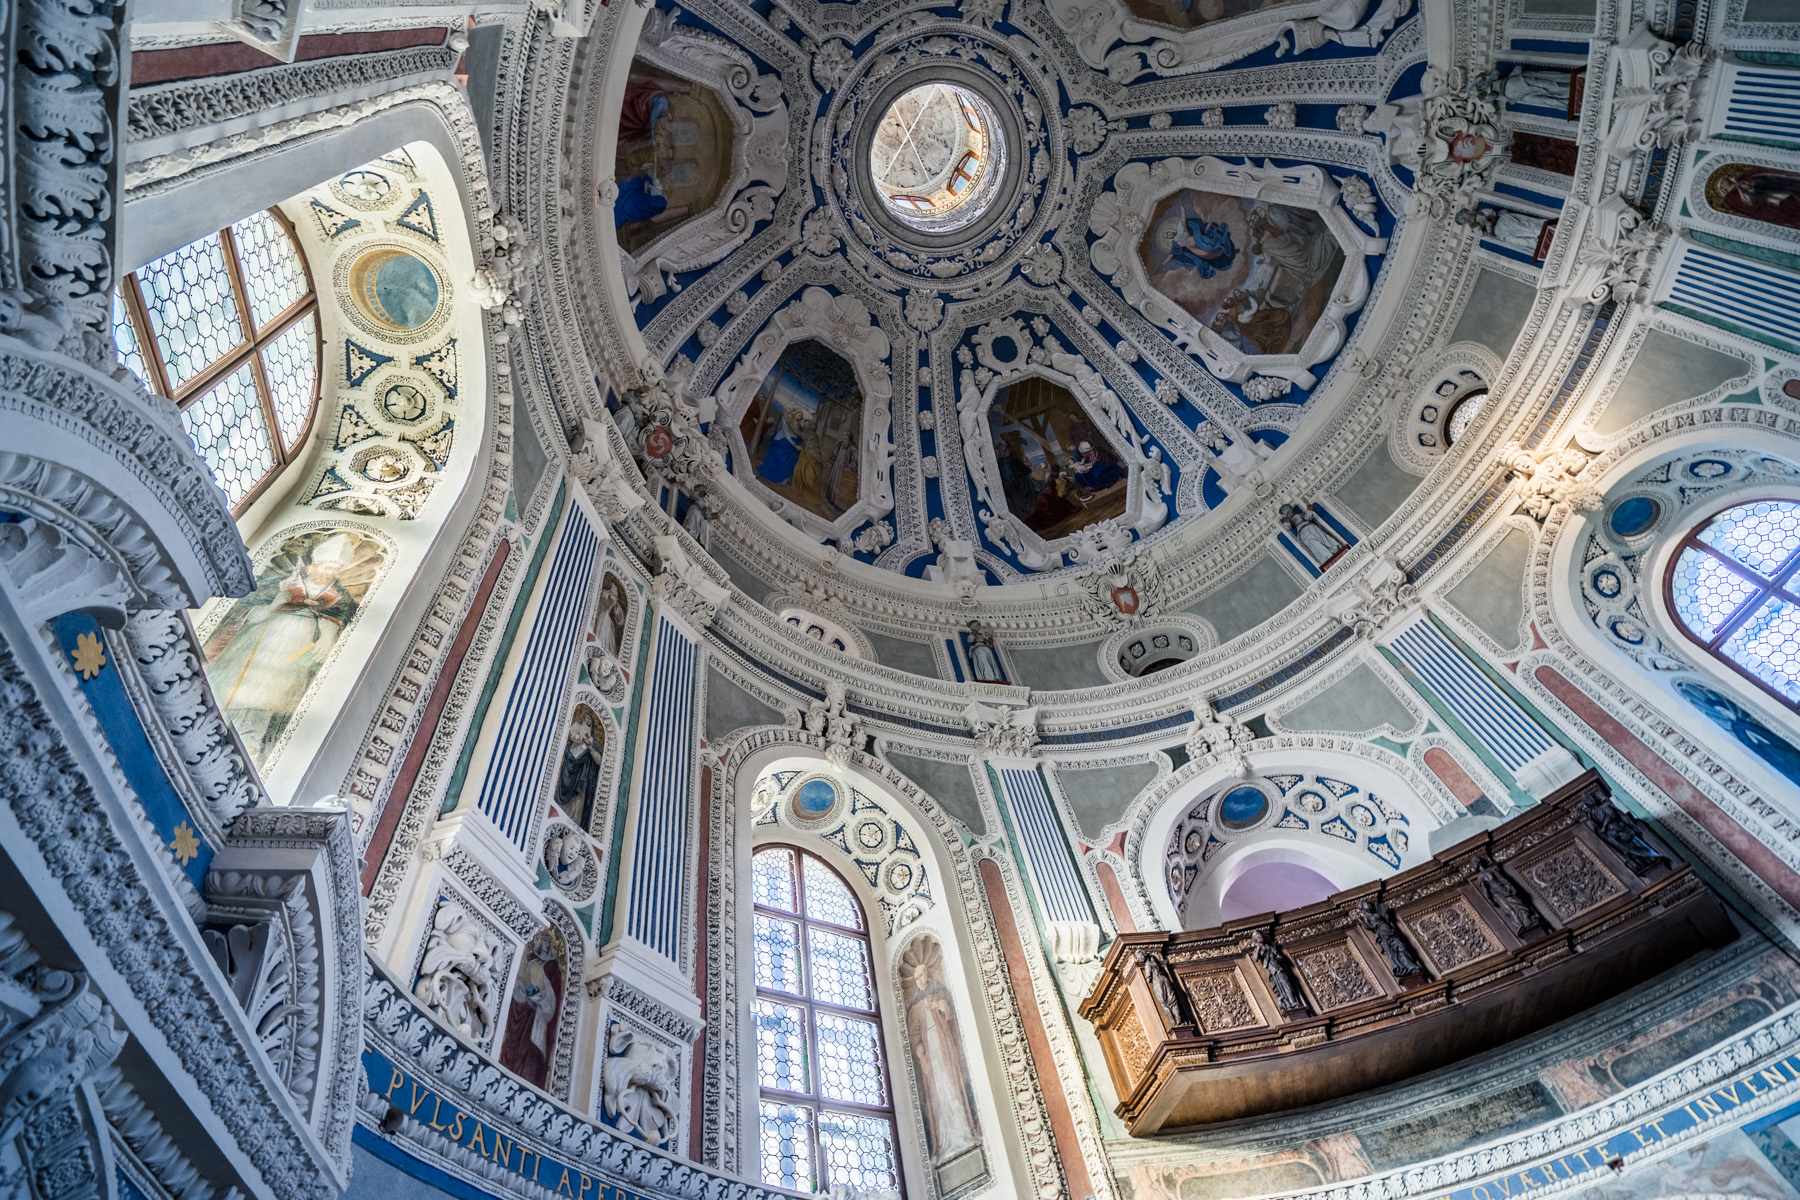 Bogato zdobiona barokowa kopuła kaplicy.